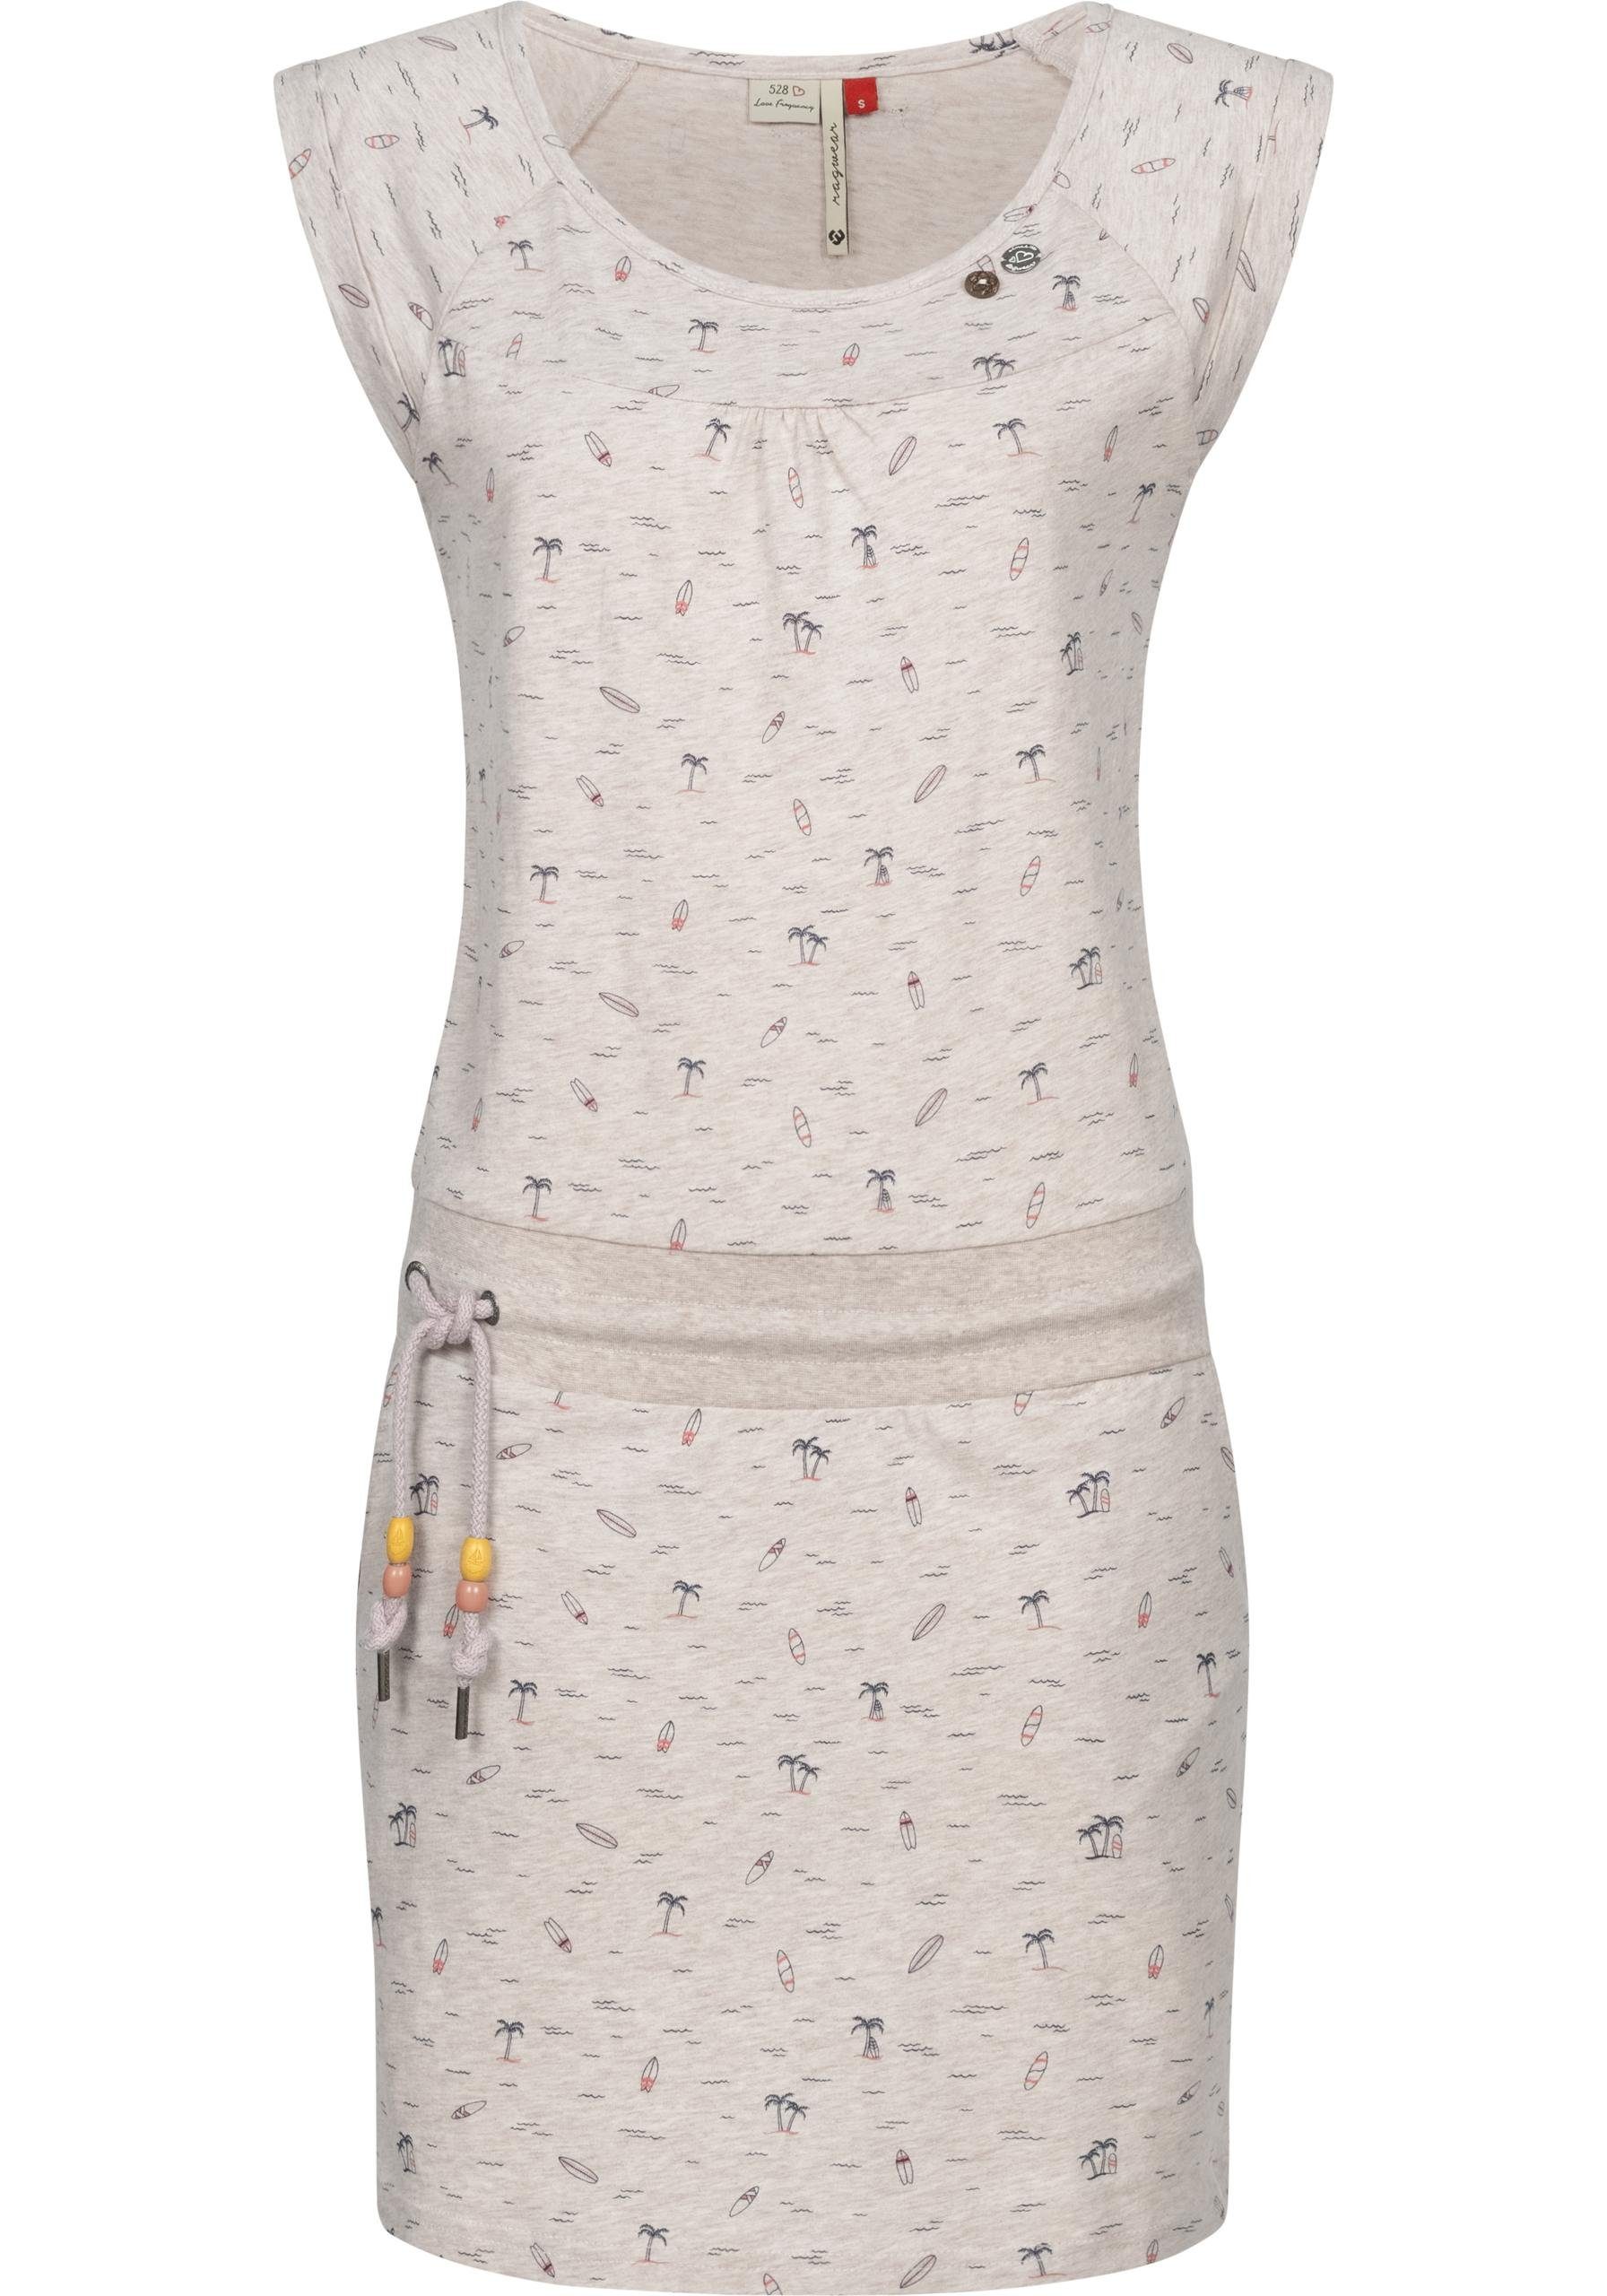 Ragwear Sommerkleid Penelope leichtes Baumwoll Kleid mit Print dunkelbeige | Wickelkleider